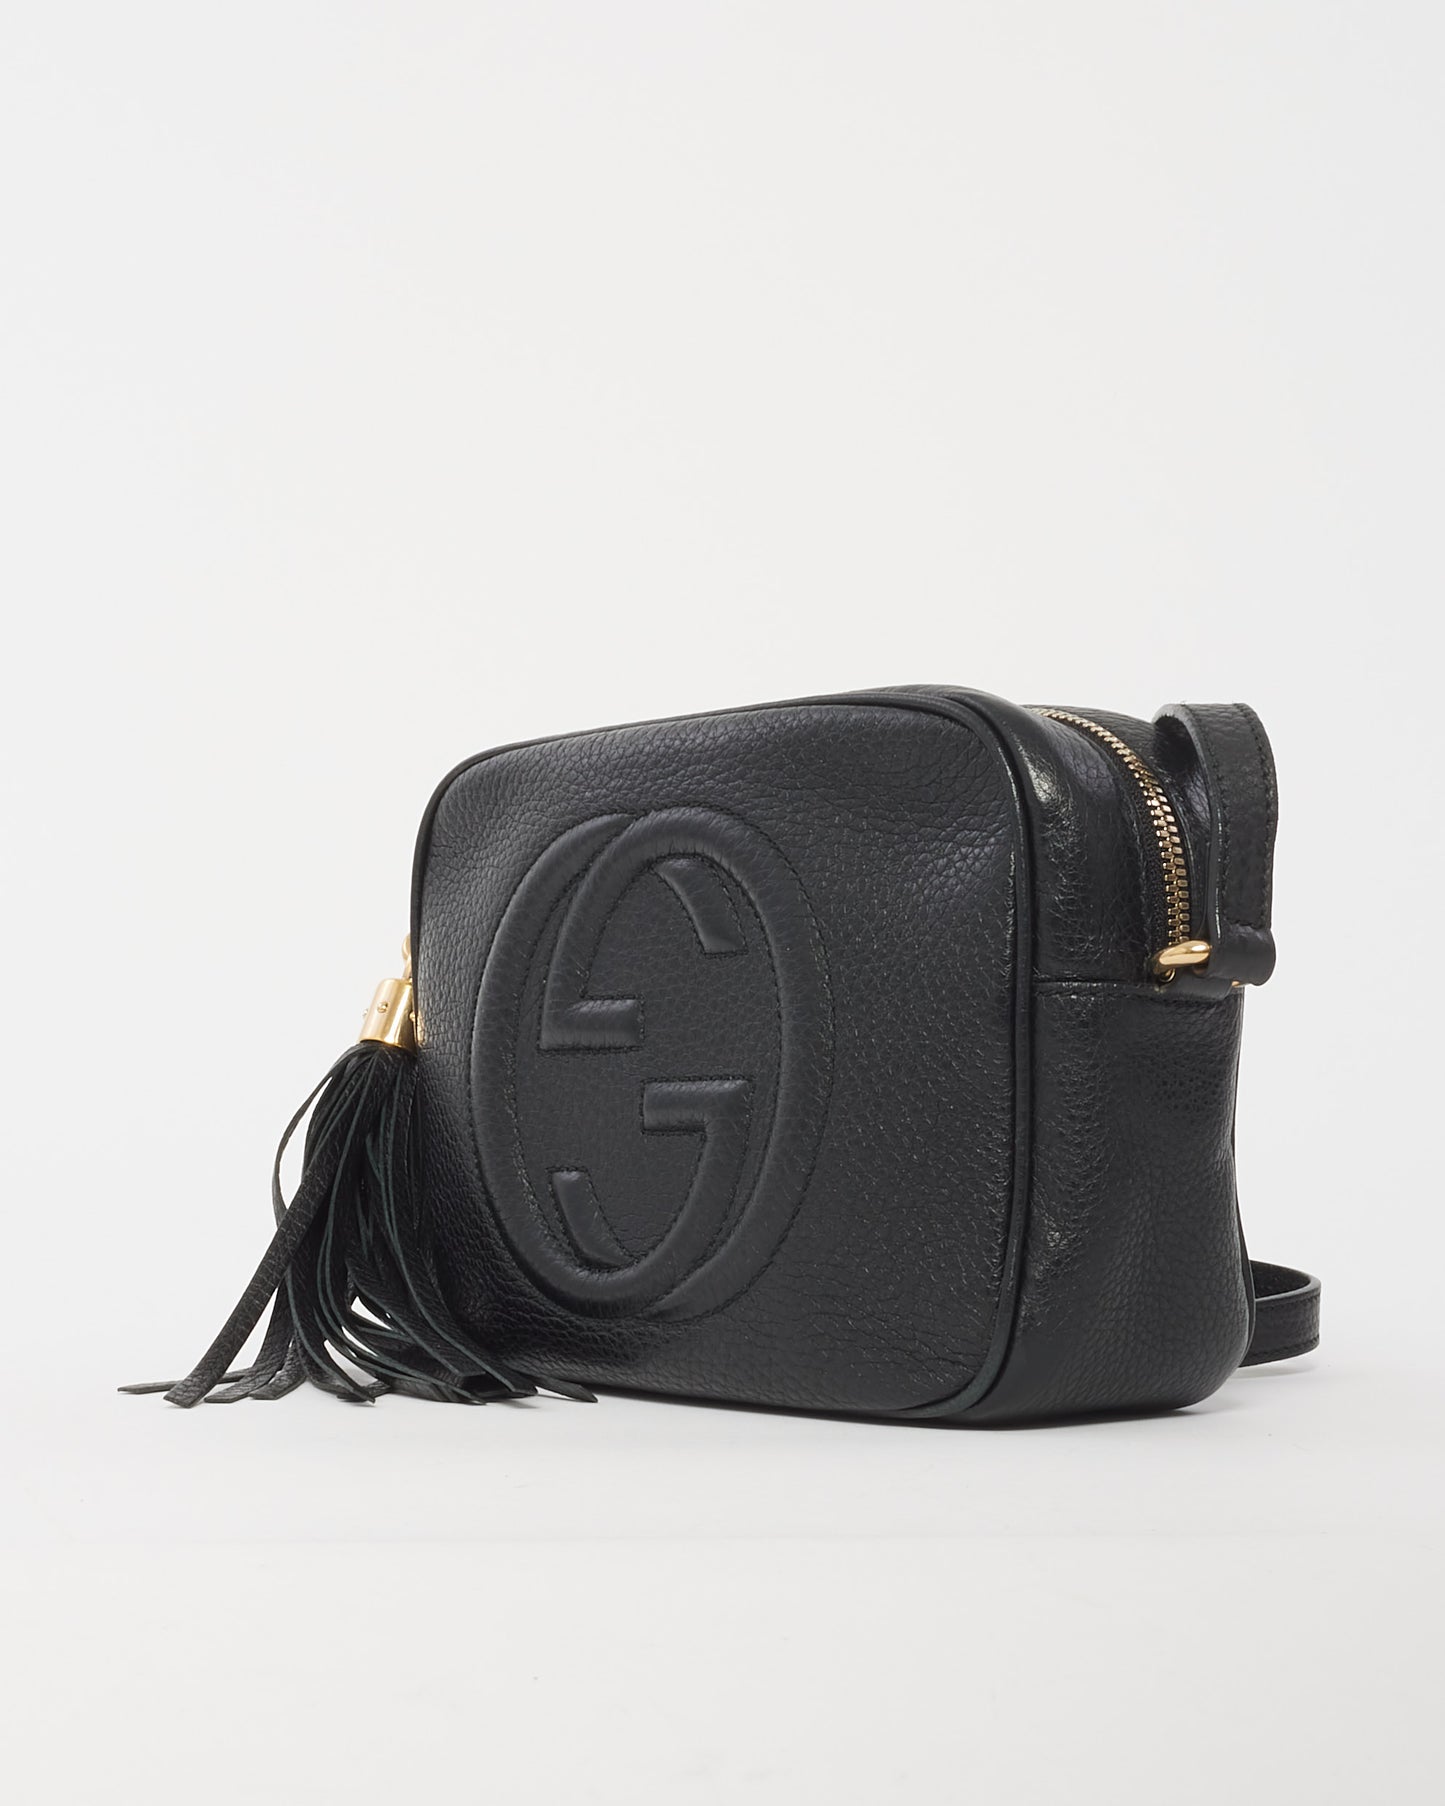 Gucci Black Leather Soho Disco Crossbody Bag